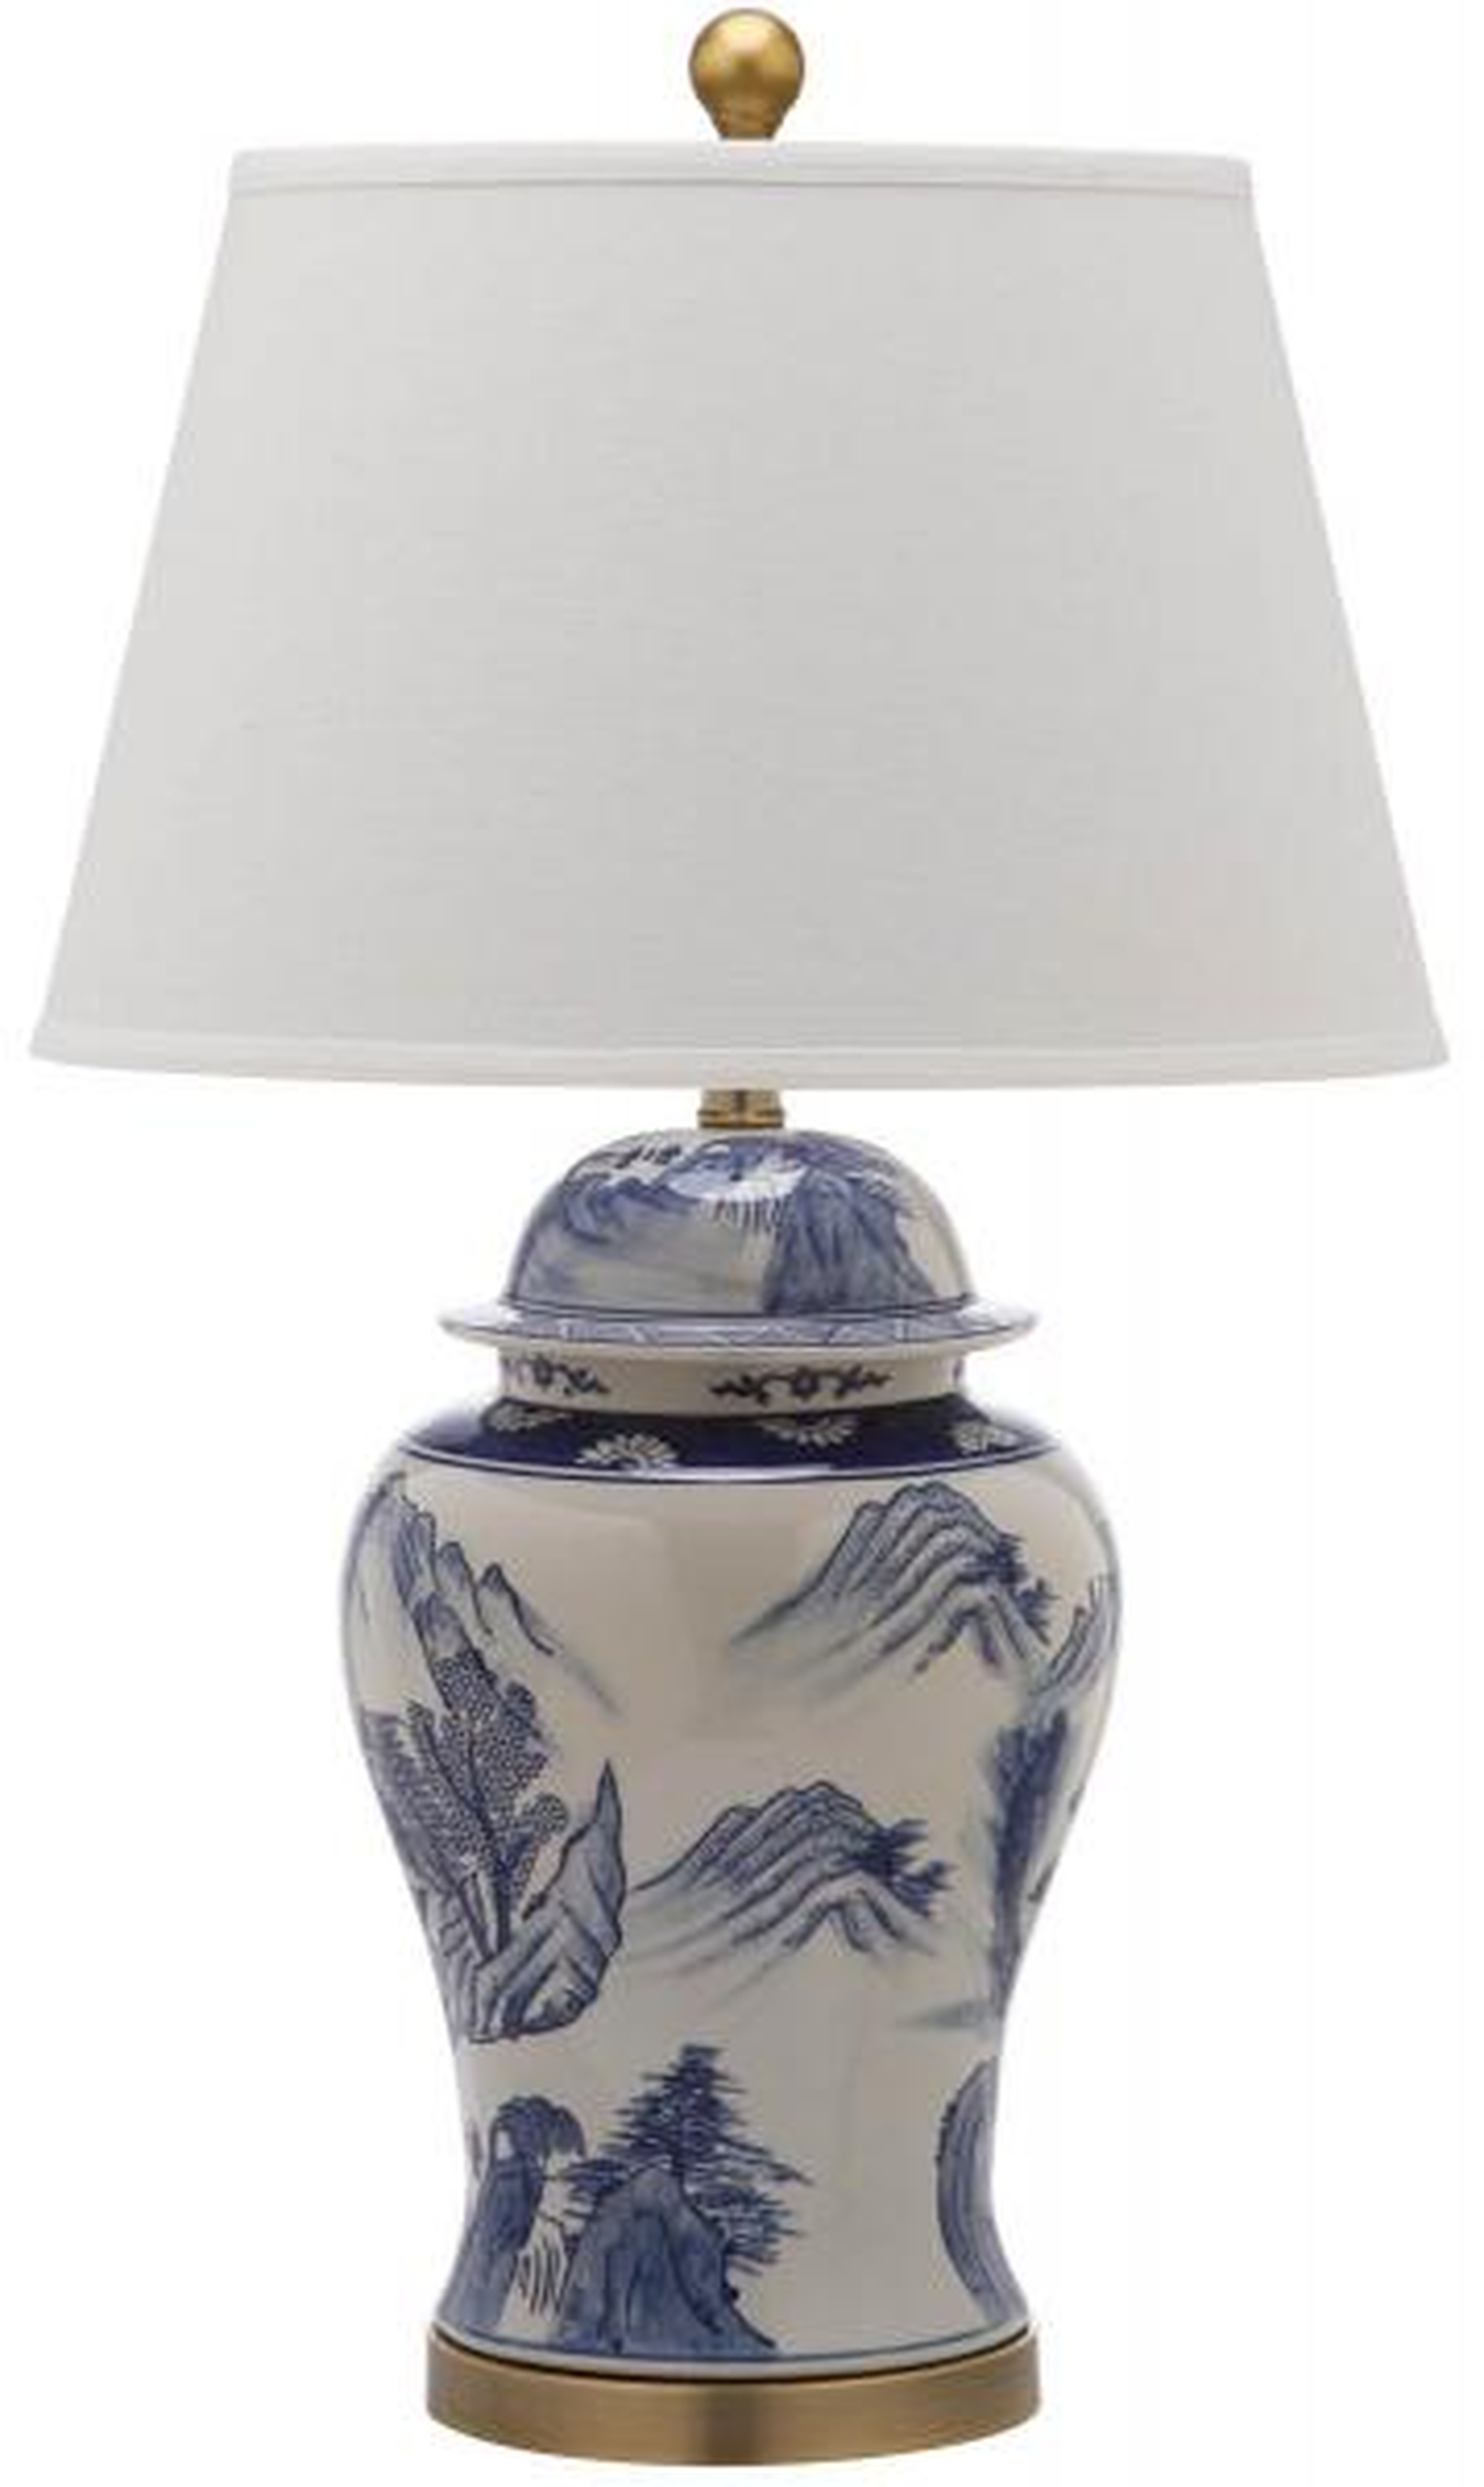 Shanghai 29.5-Inch H Ginger Jar Table Lamp - Blue/White - Arlo Home - Arlo Home